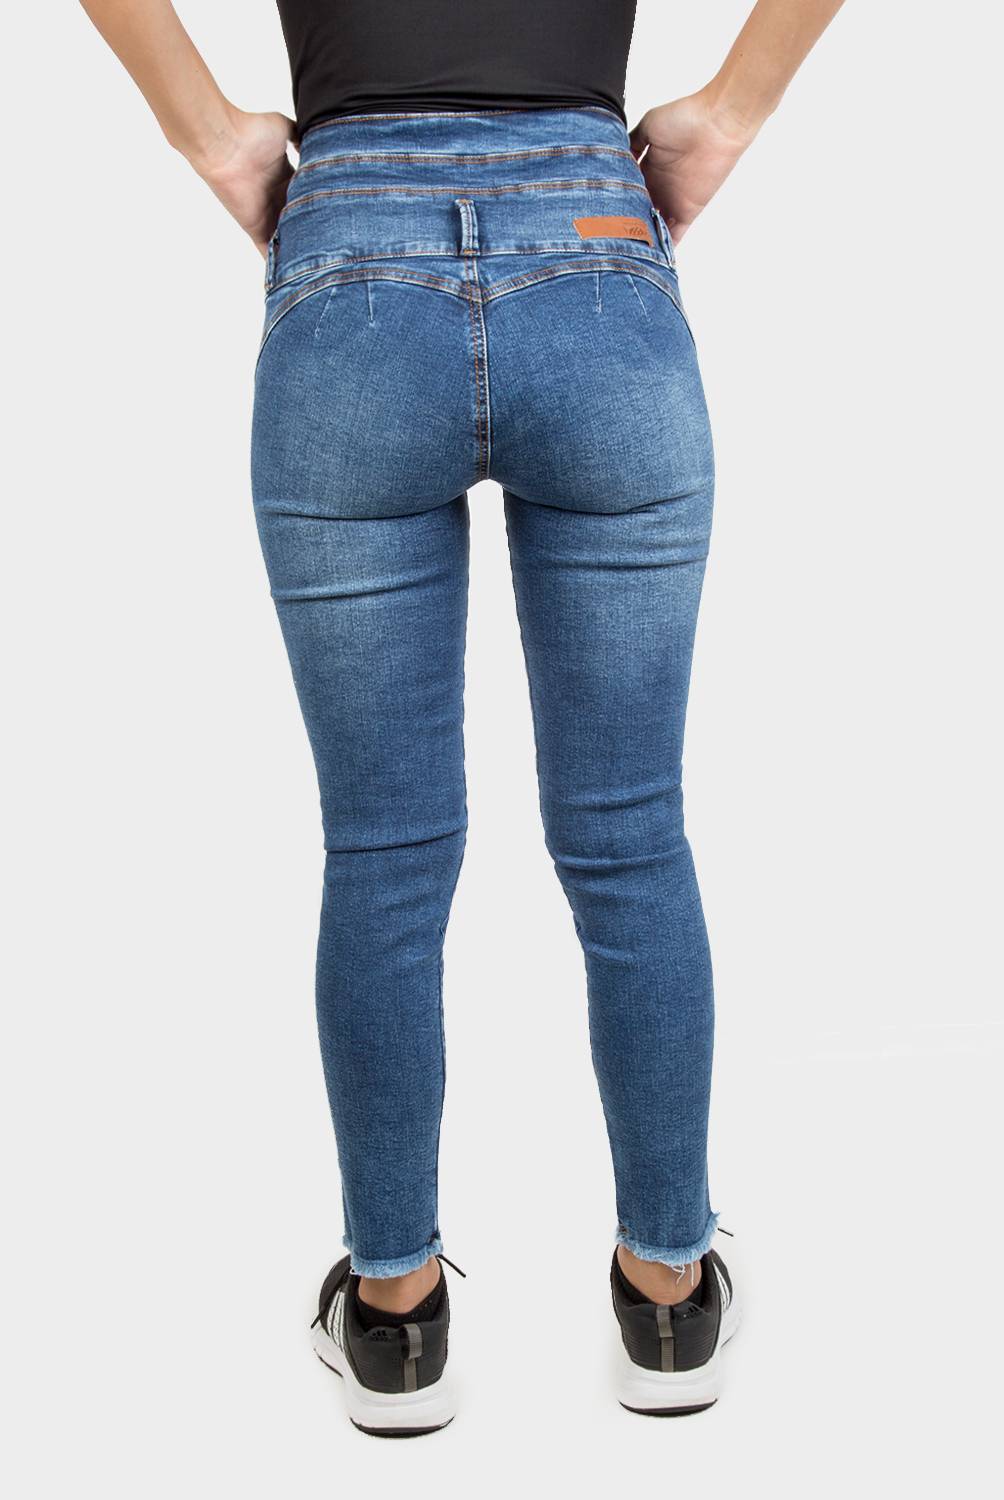 MOSSIMO - Jeans Faja